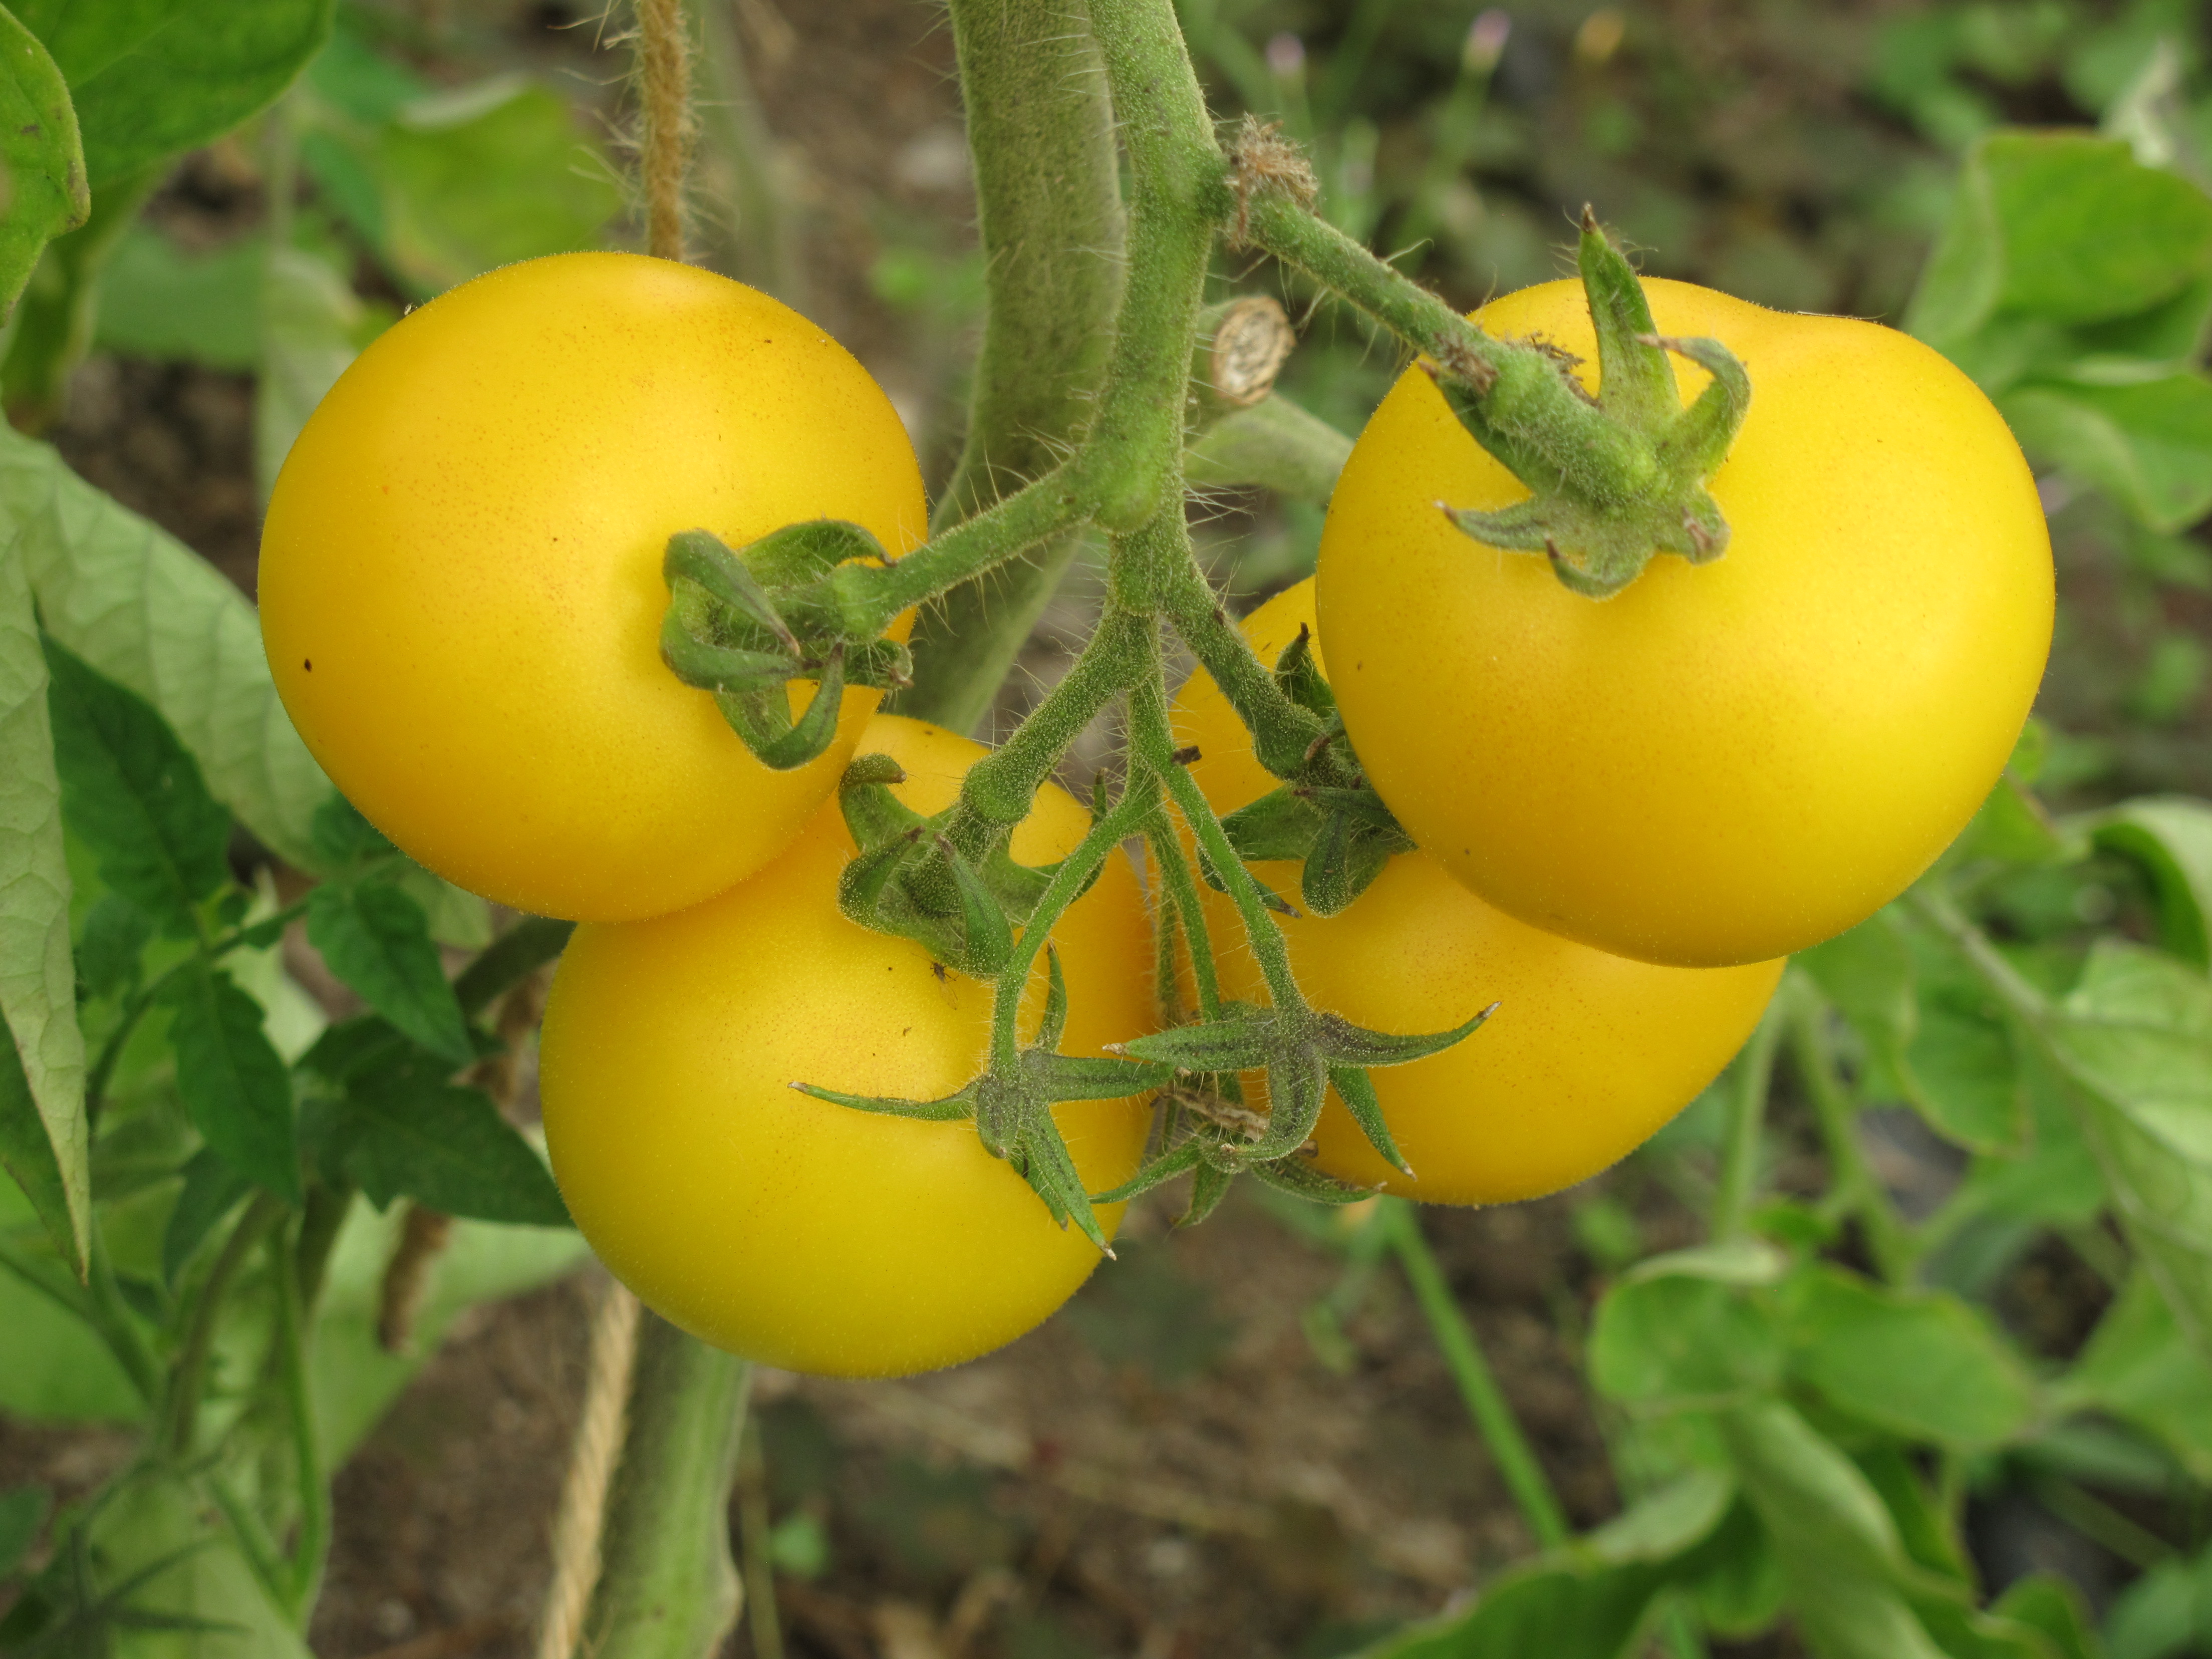 Yellow tomatoes